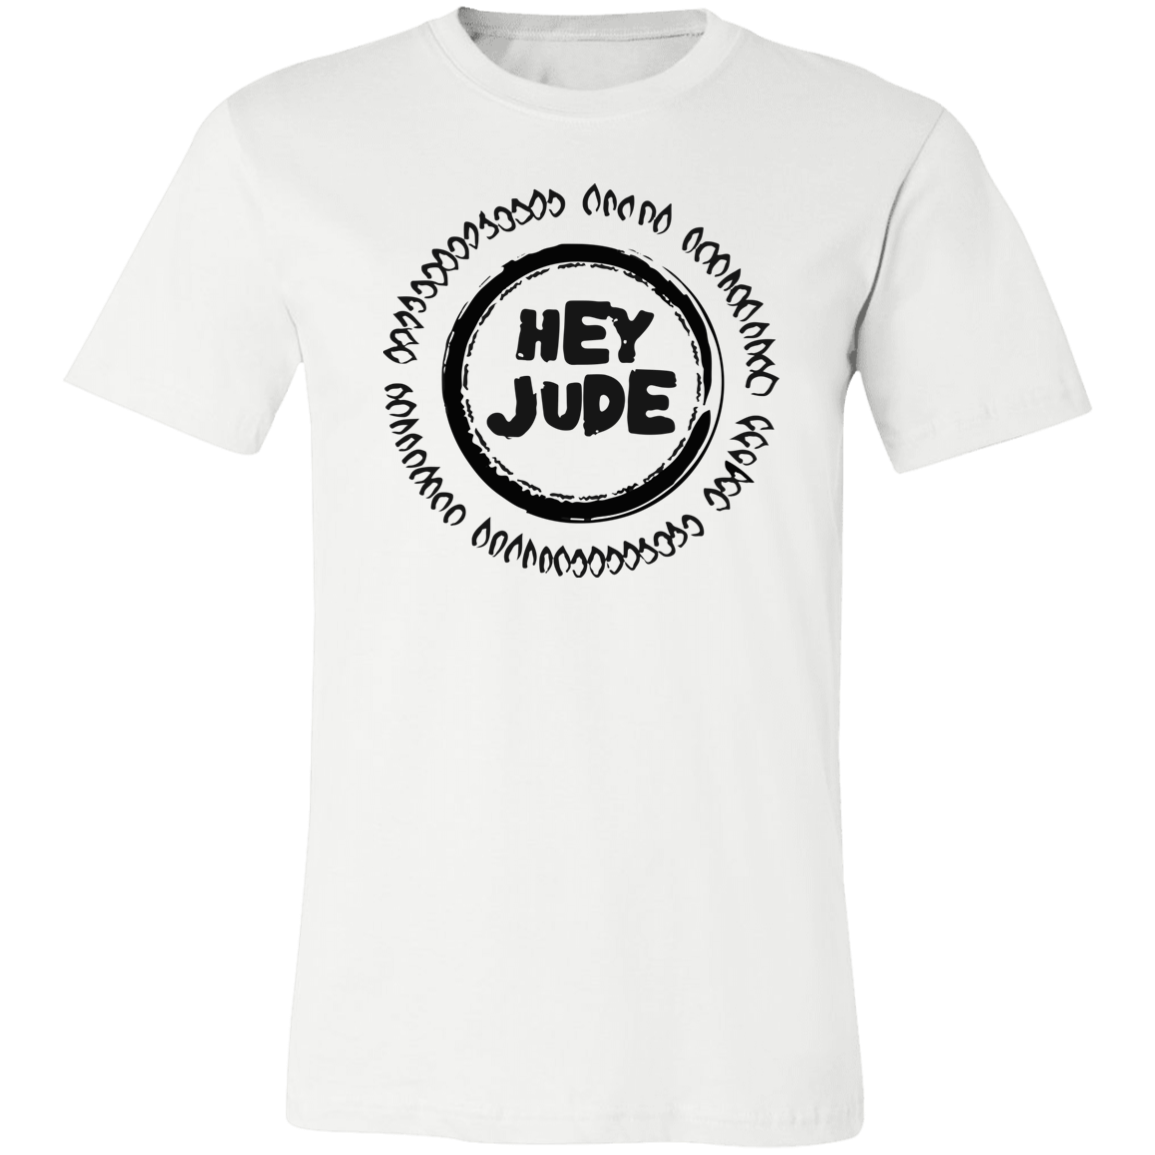 Hey Jude Short-Sleeve T-Shirt